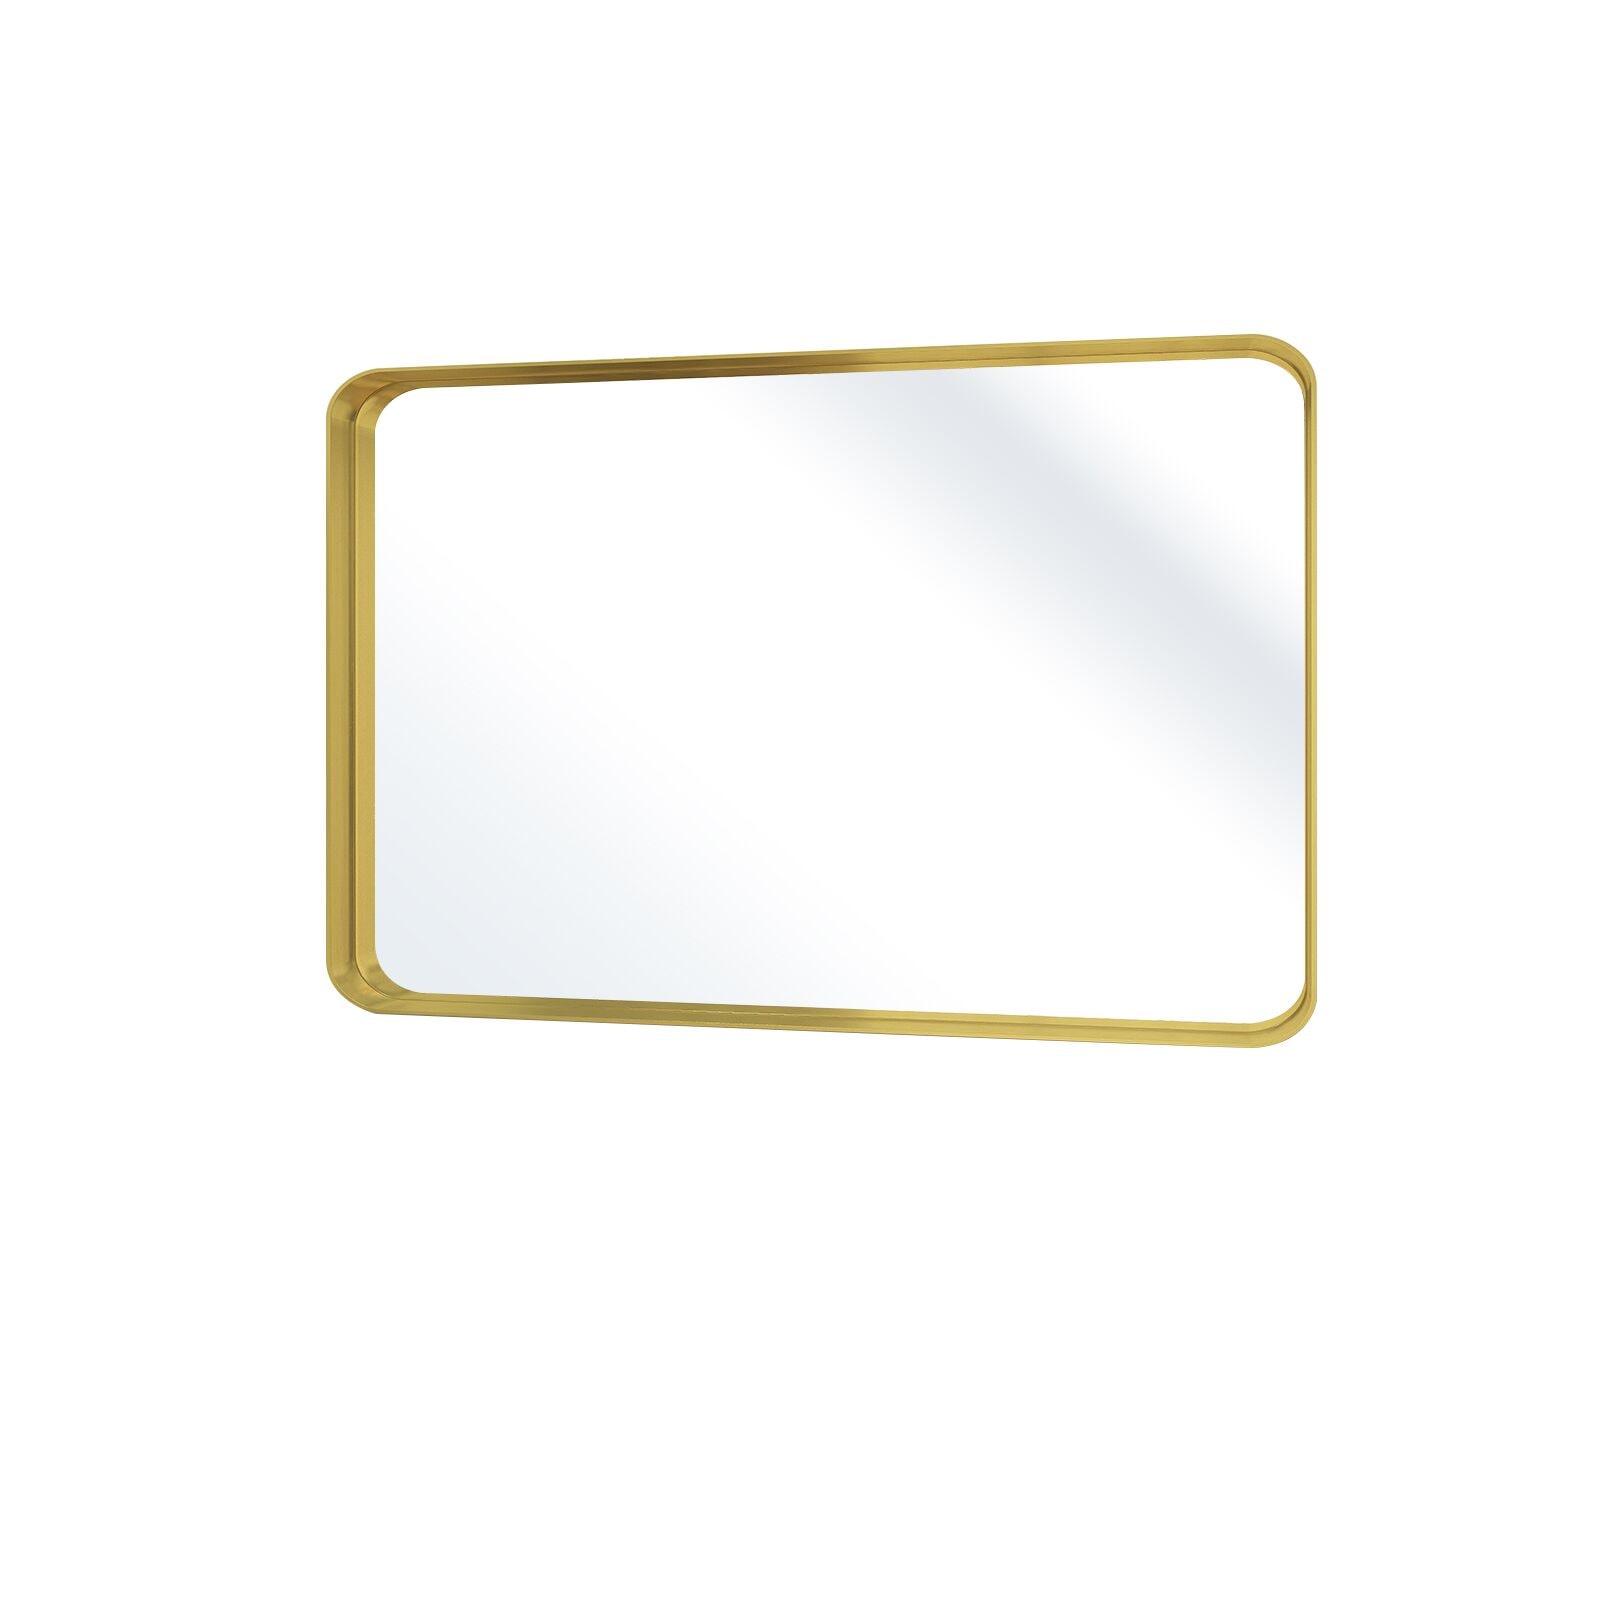 A TO Z GLASS Mirror bracket hooks set of Set 10 Nos 6x6 Square 